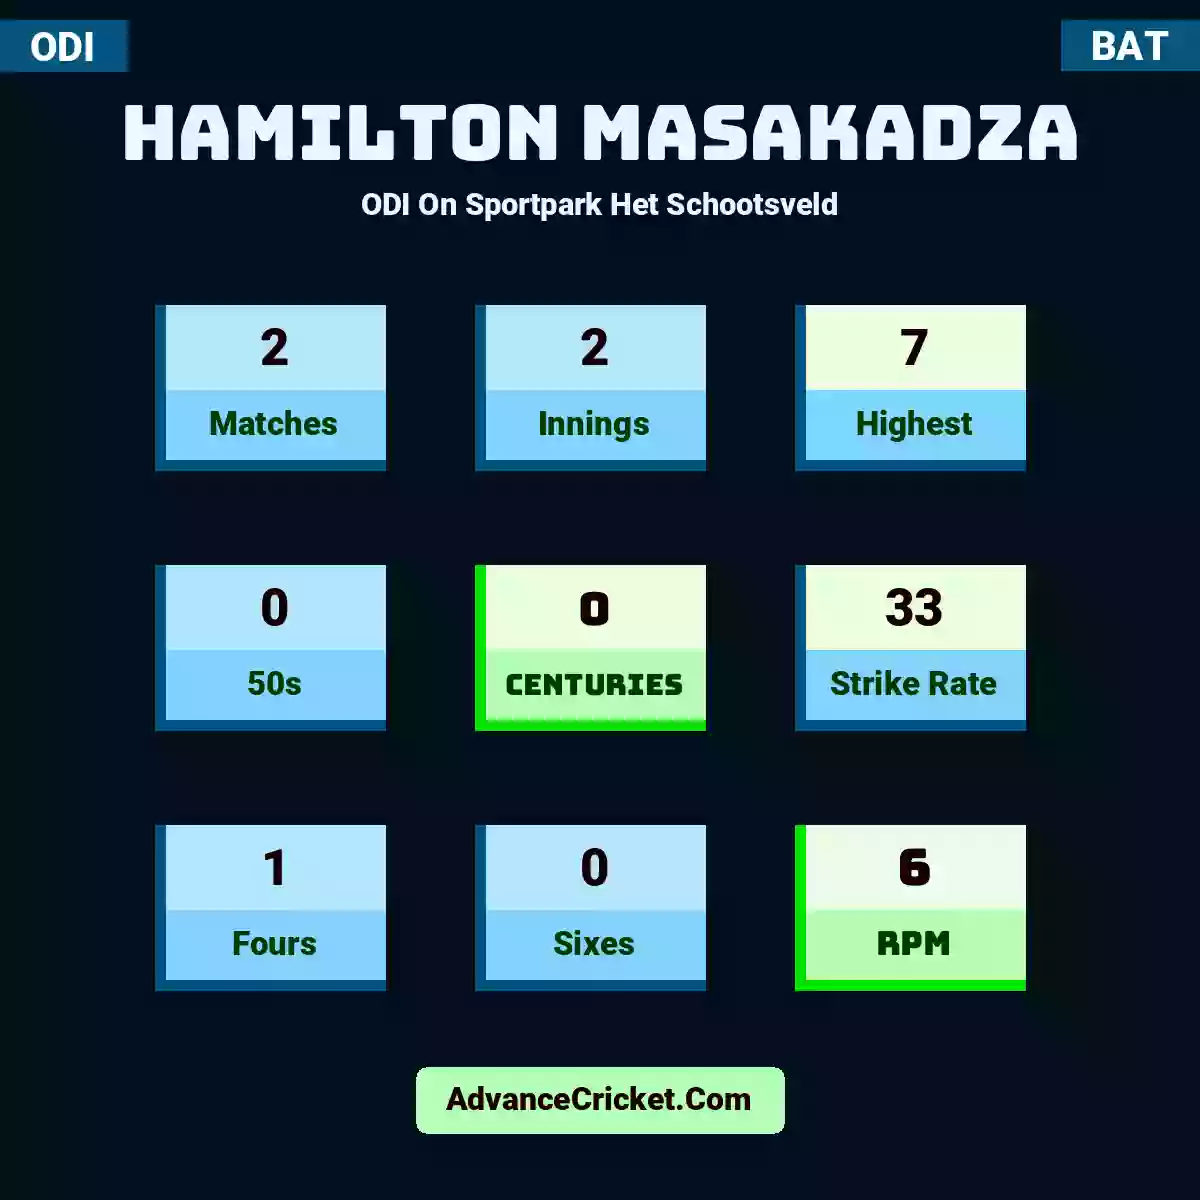 Hamilton Masakadza ODI  On Sportpark Het Schootsveld, Hamilton Masakadza played 2 matches, scored 7 runs as highest, 0 half-centuries, and 0 centuries, with a strike rate of 33. H.Masakadza hit 1 fours and 0 sixes, with an RPM of 6.